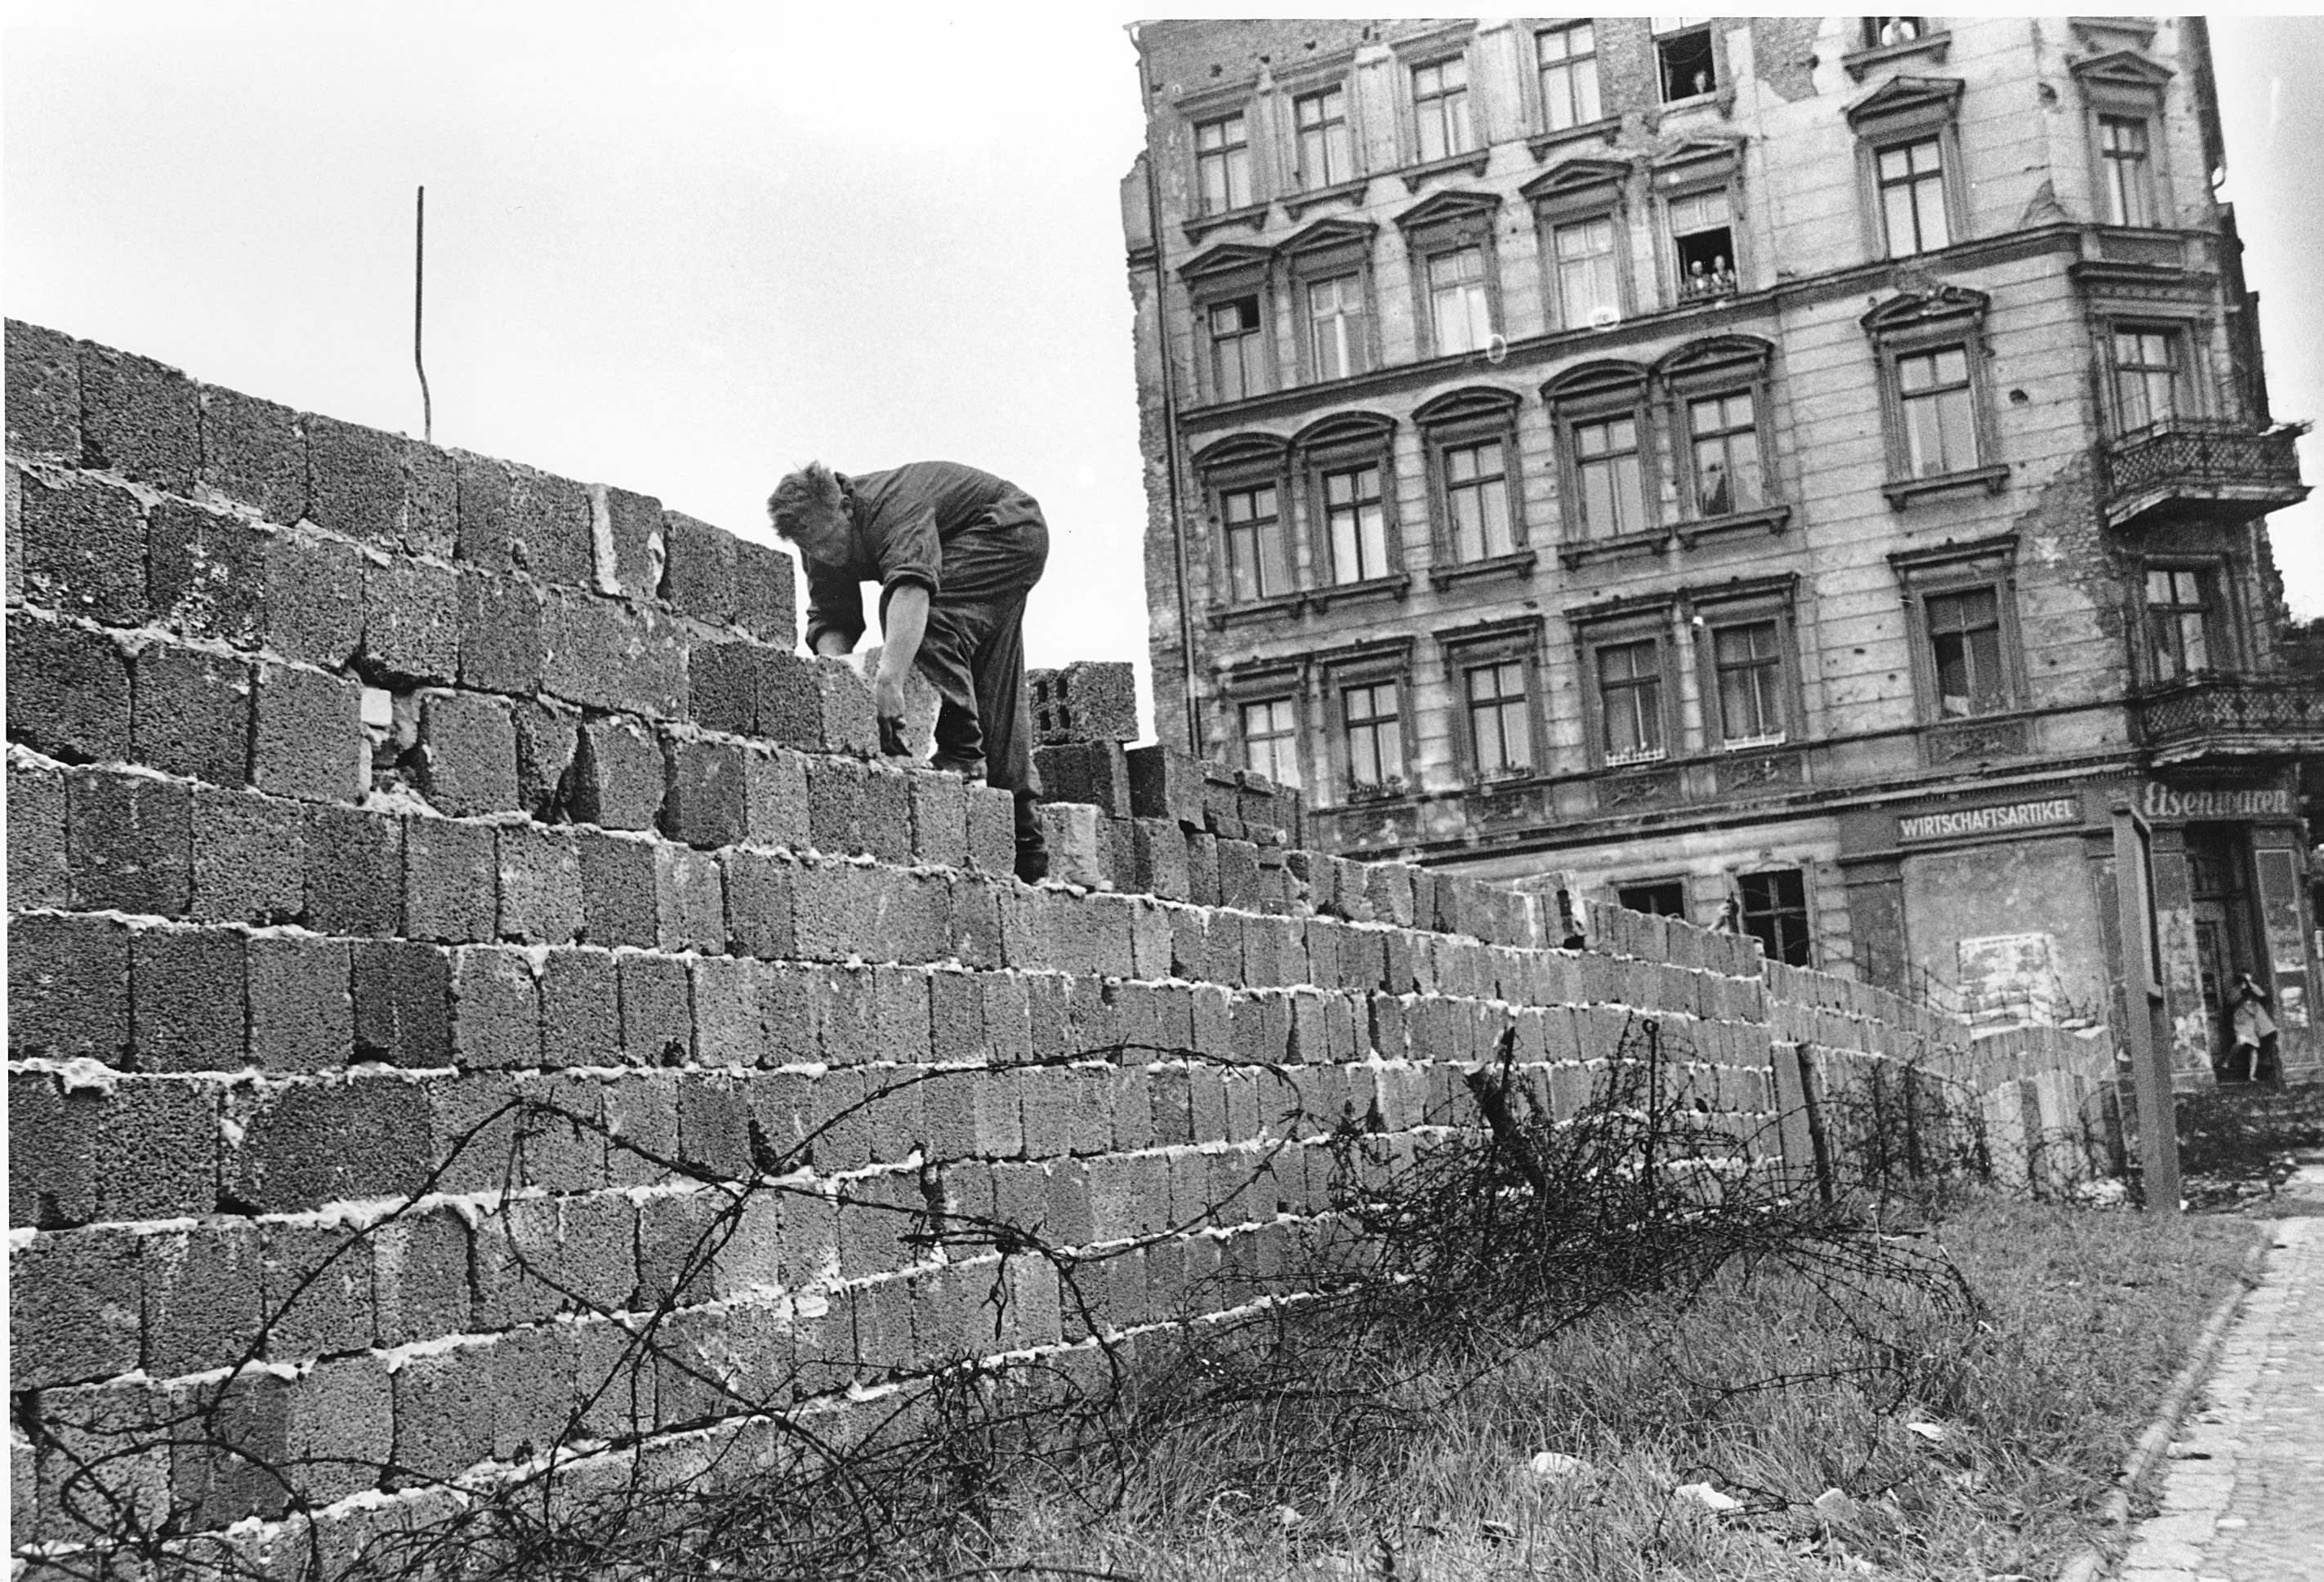 The berlin wall